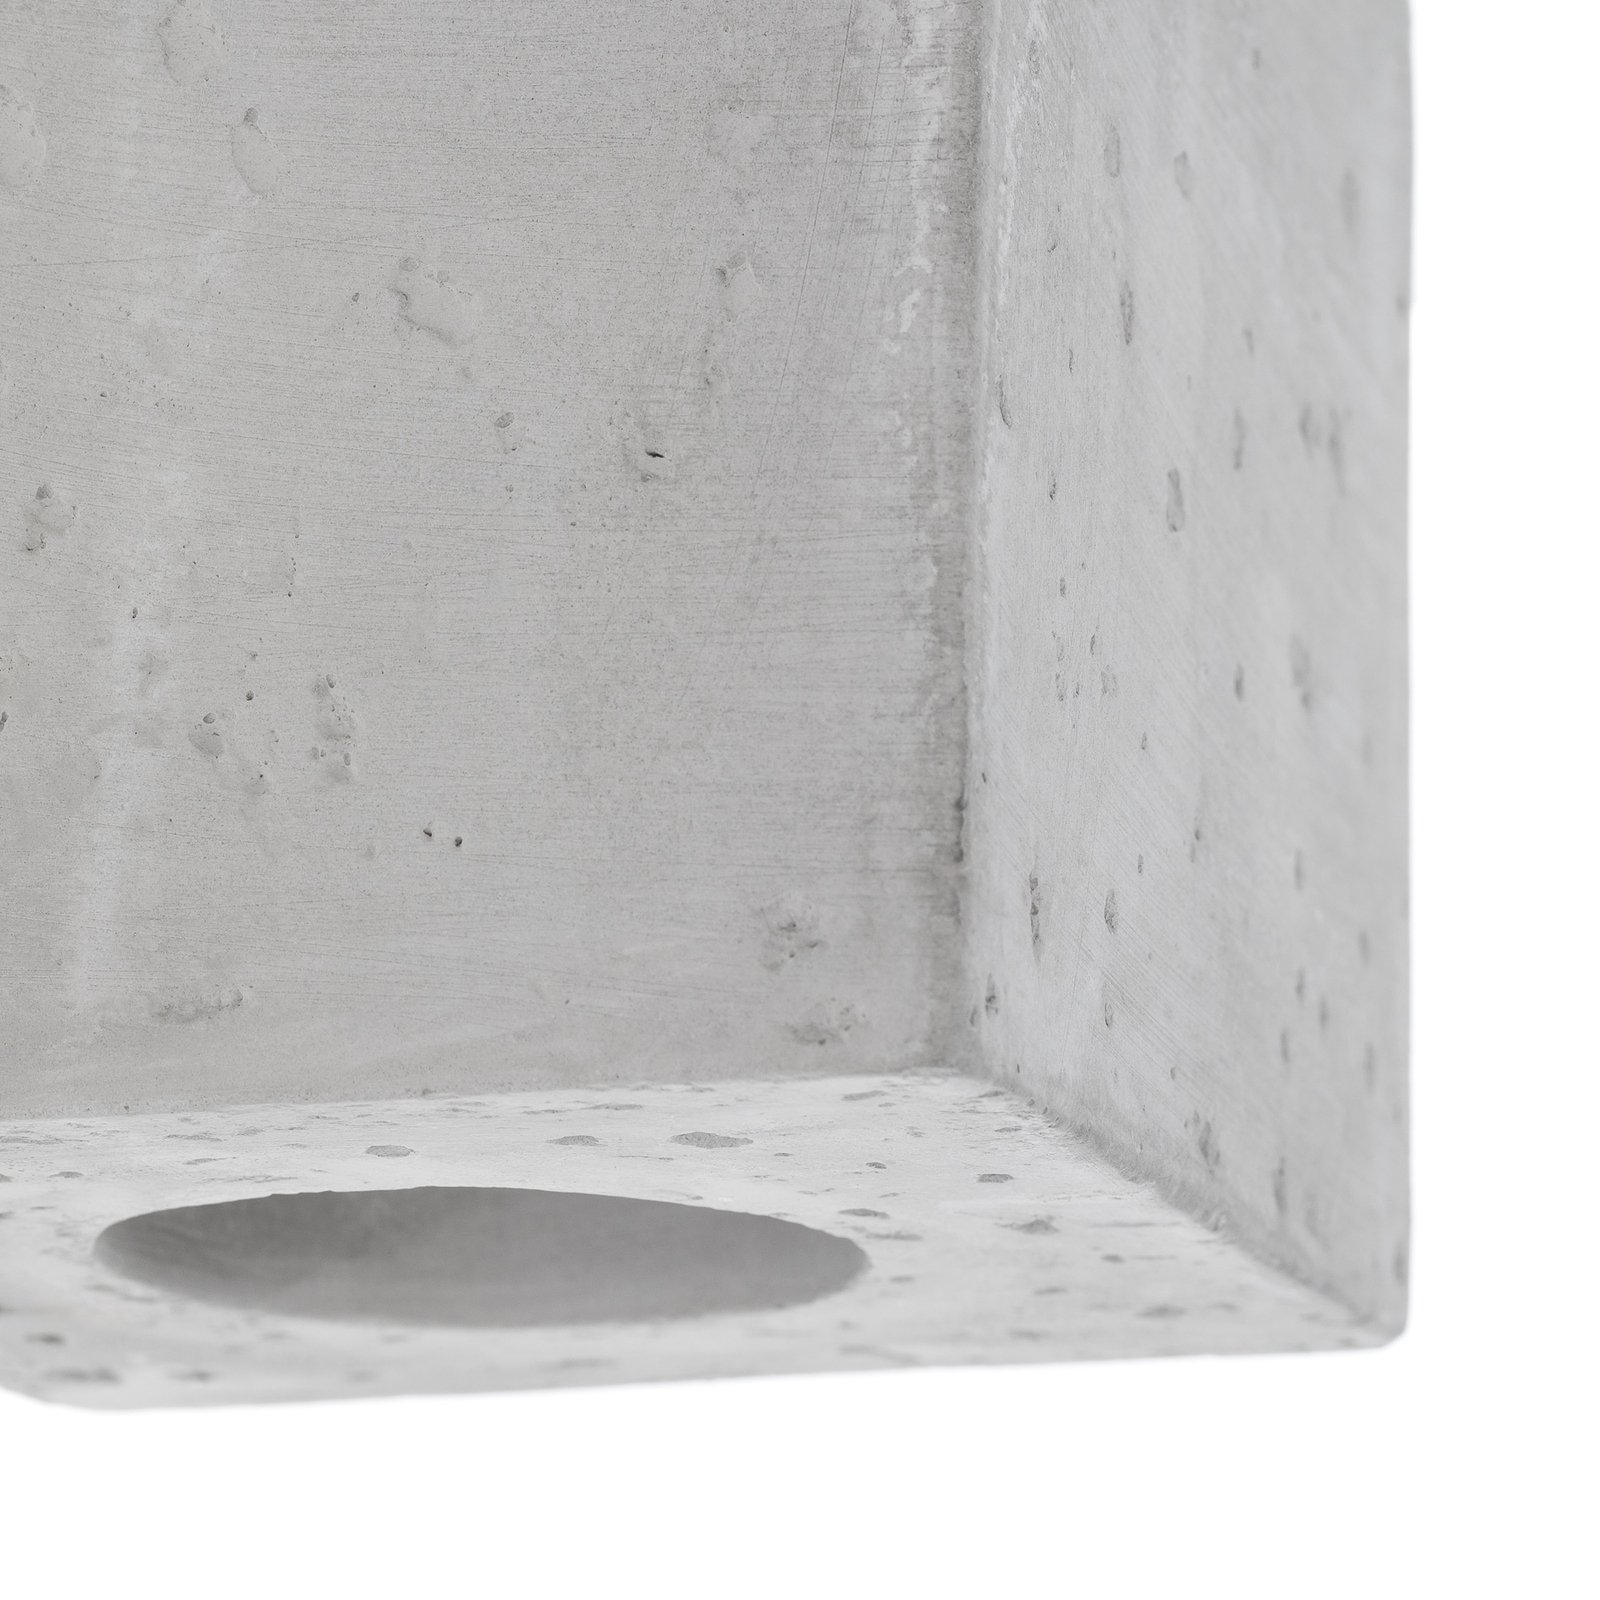 Plafondlamp Ara als betonnen kubus 10cm x 10cm